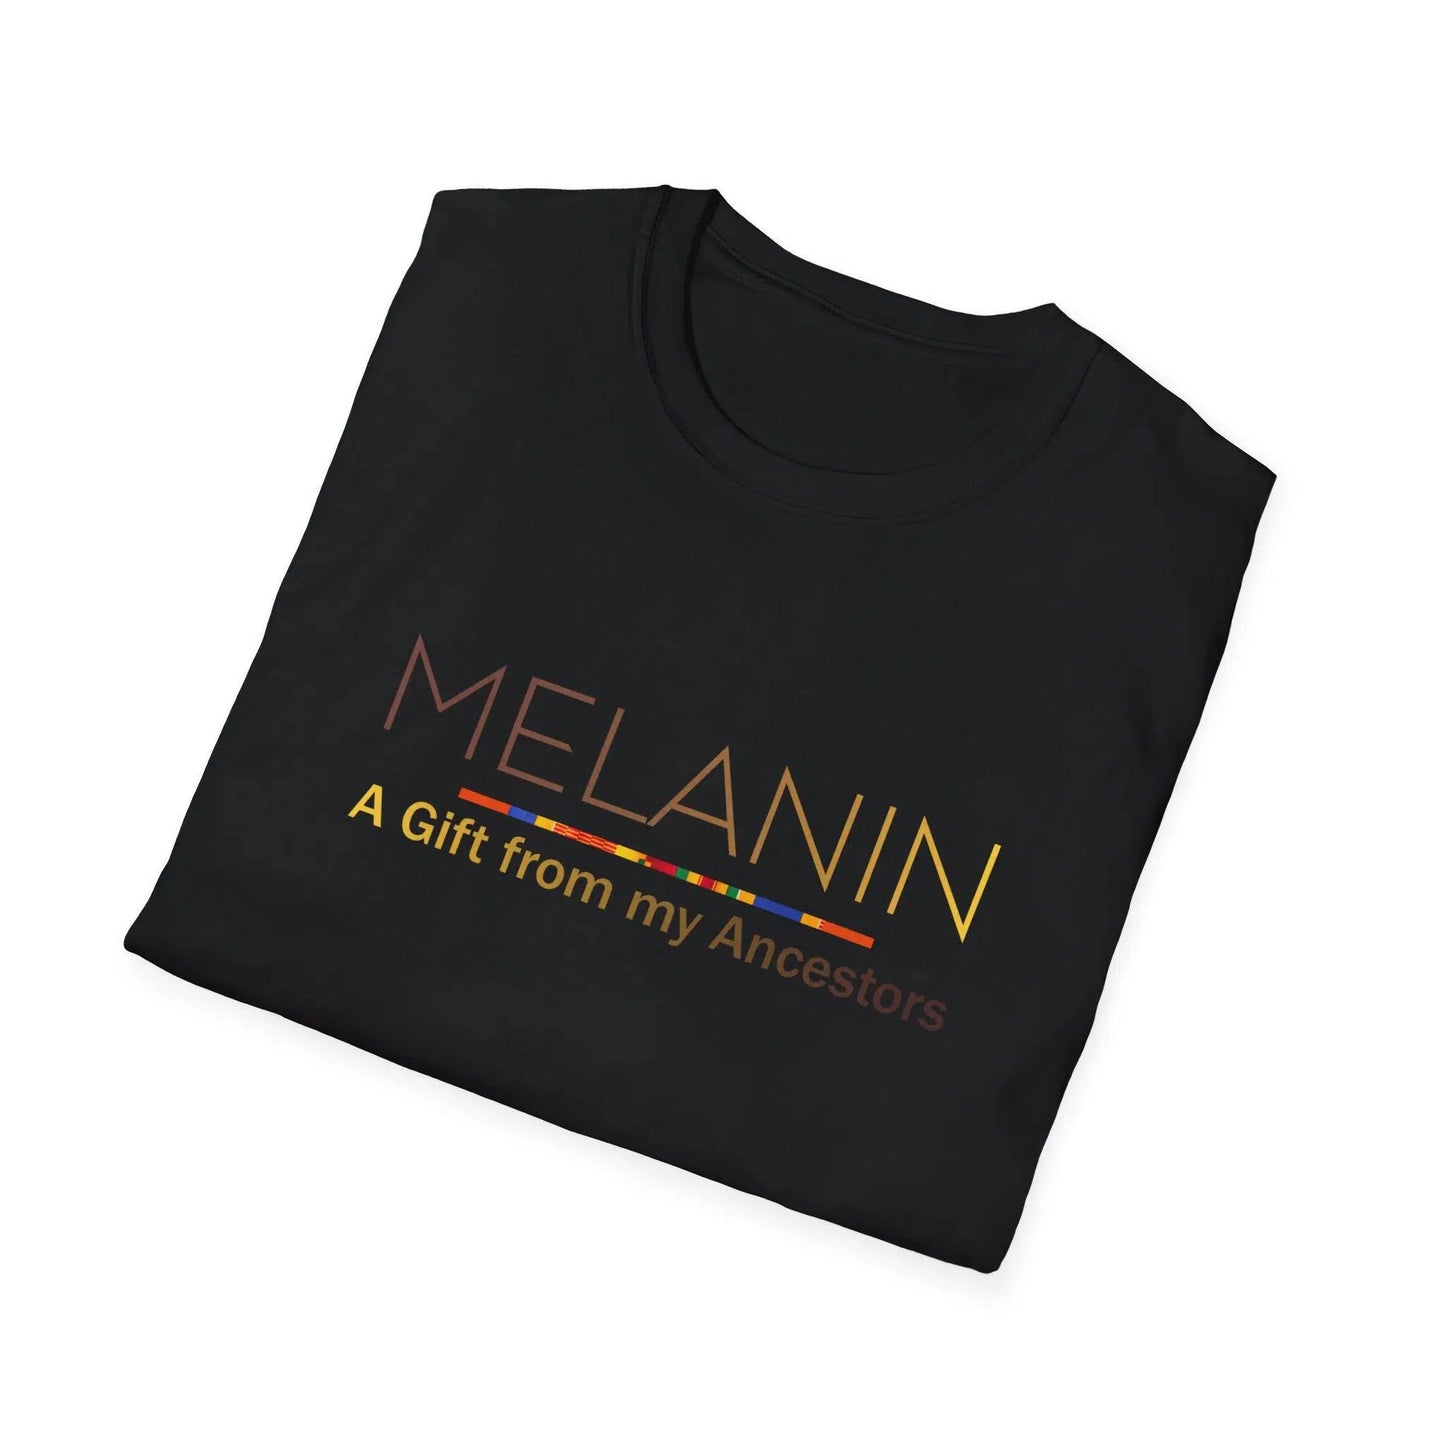 melanin t shirt wear tee